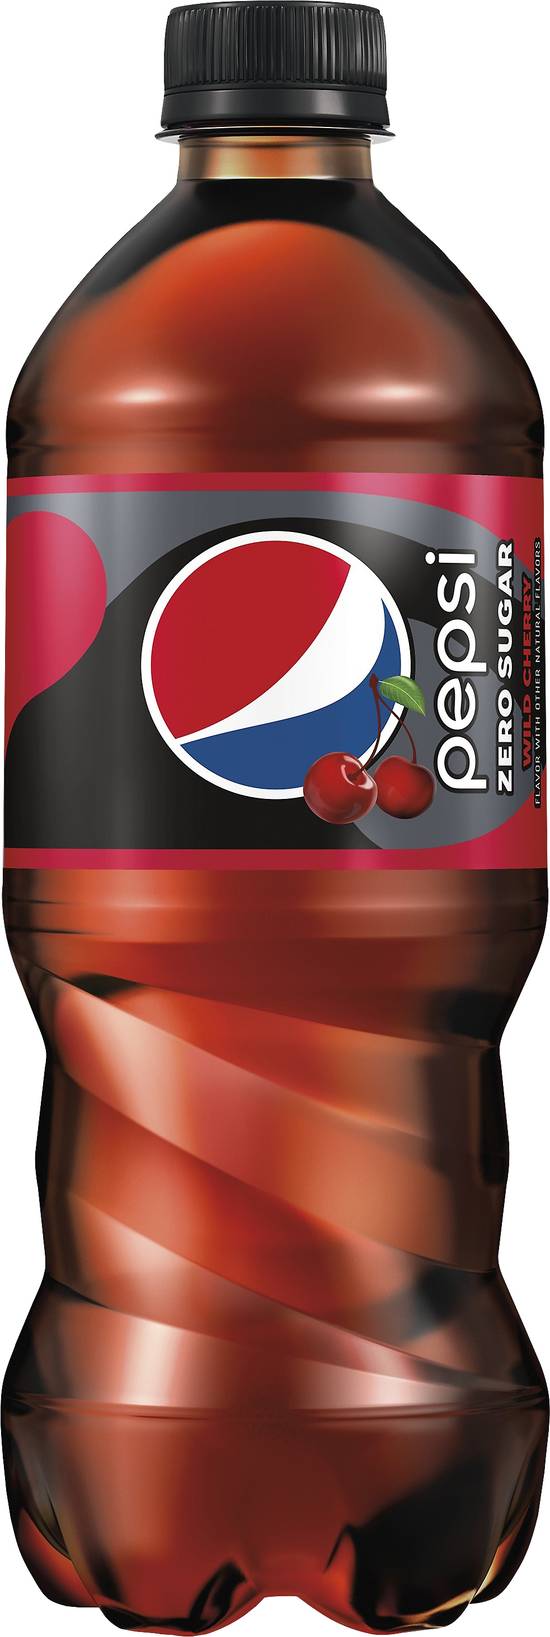 Pepsi Zero Sugar Wild Cherry (20 fl oz)